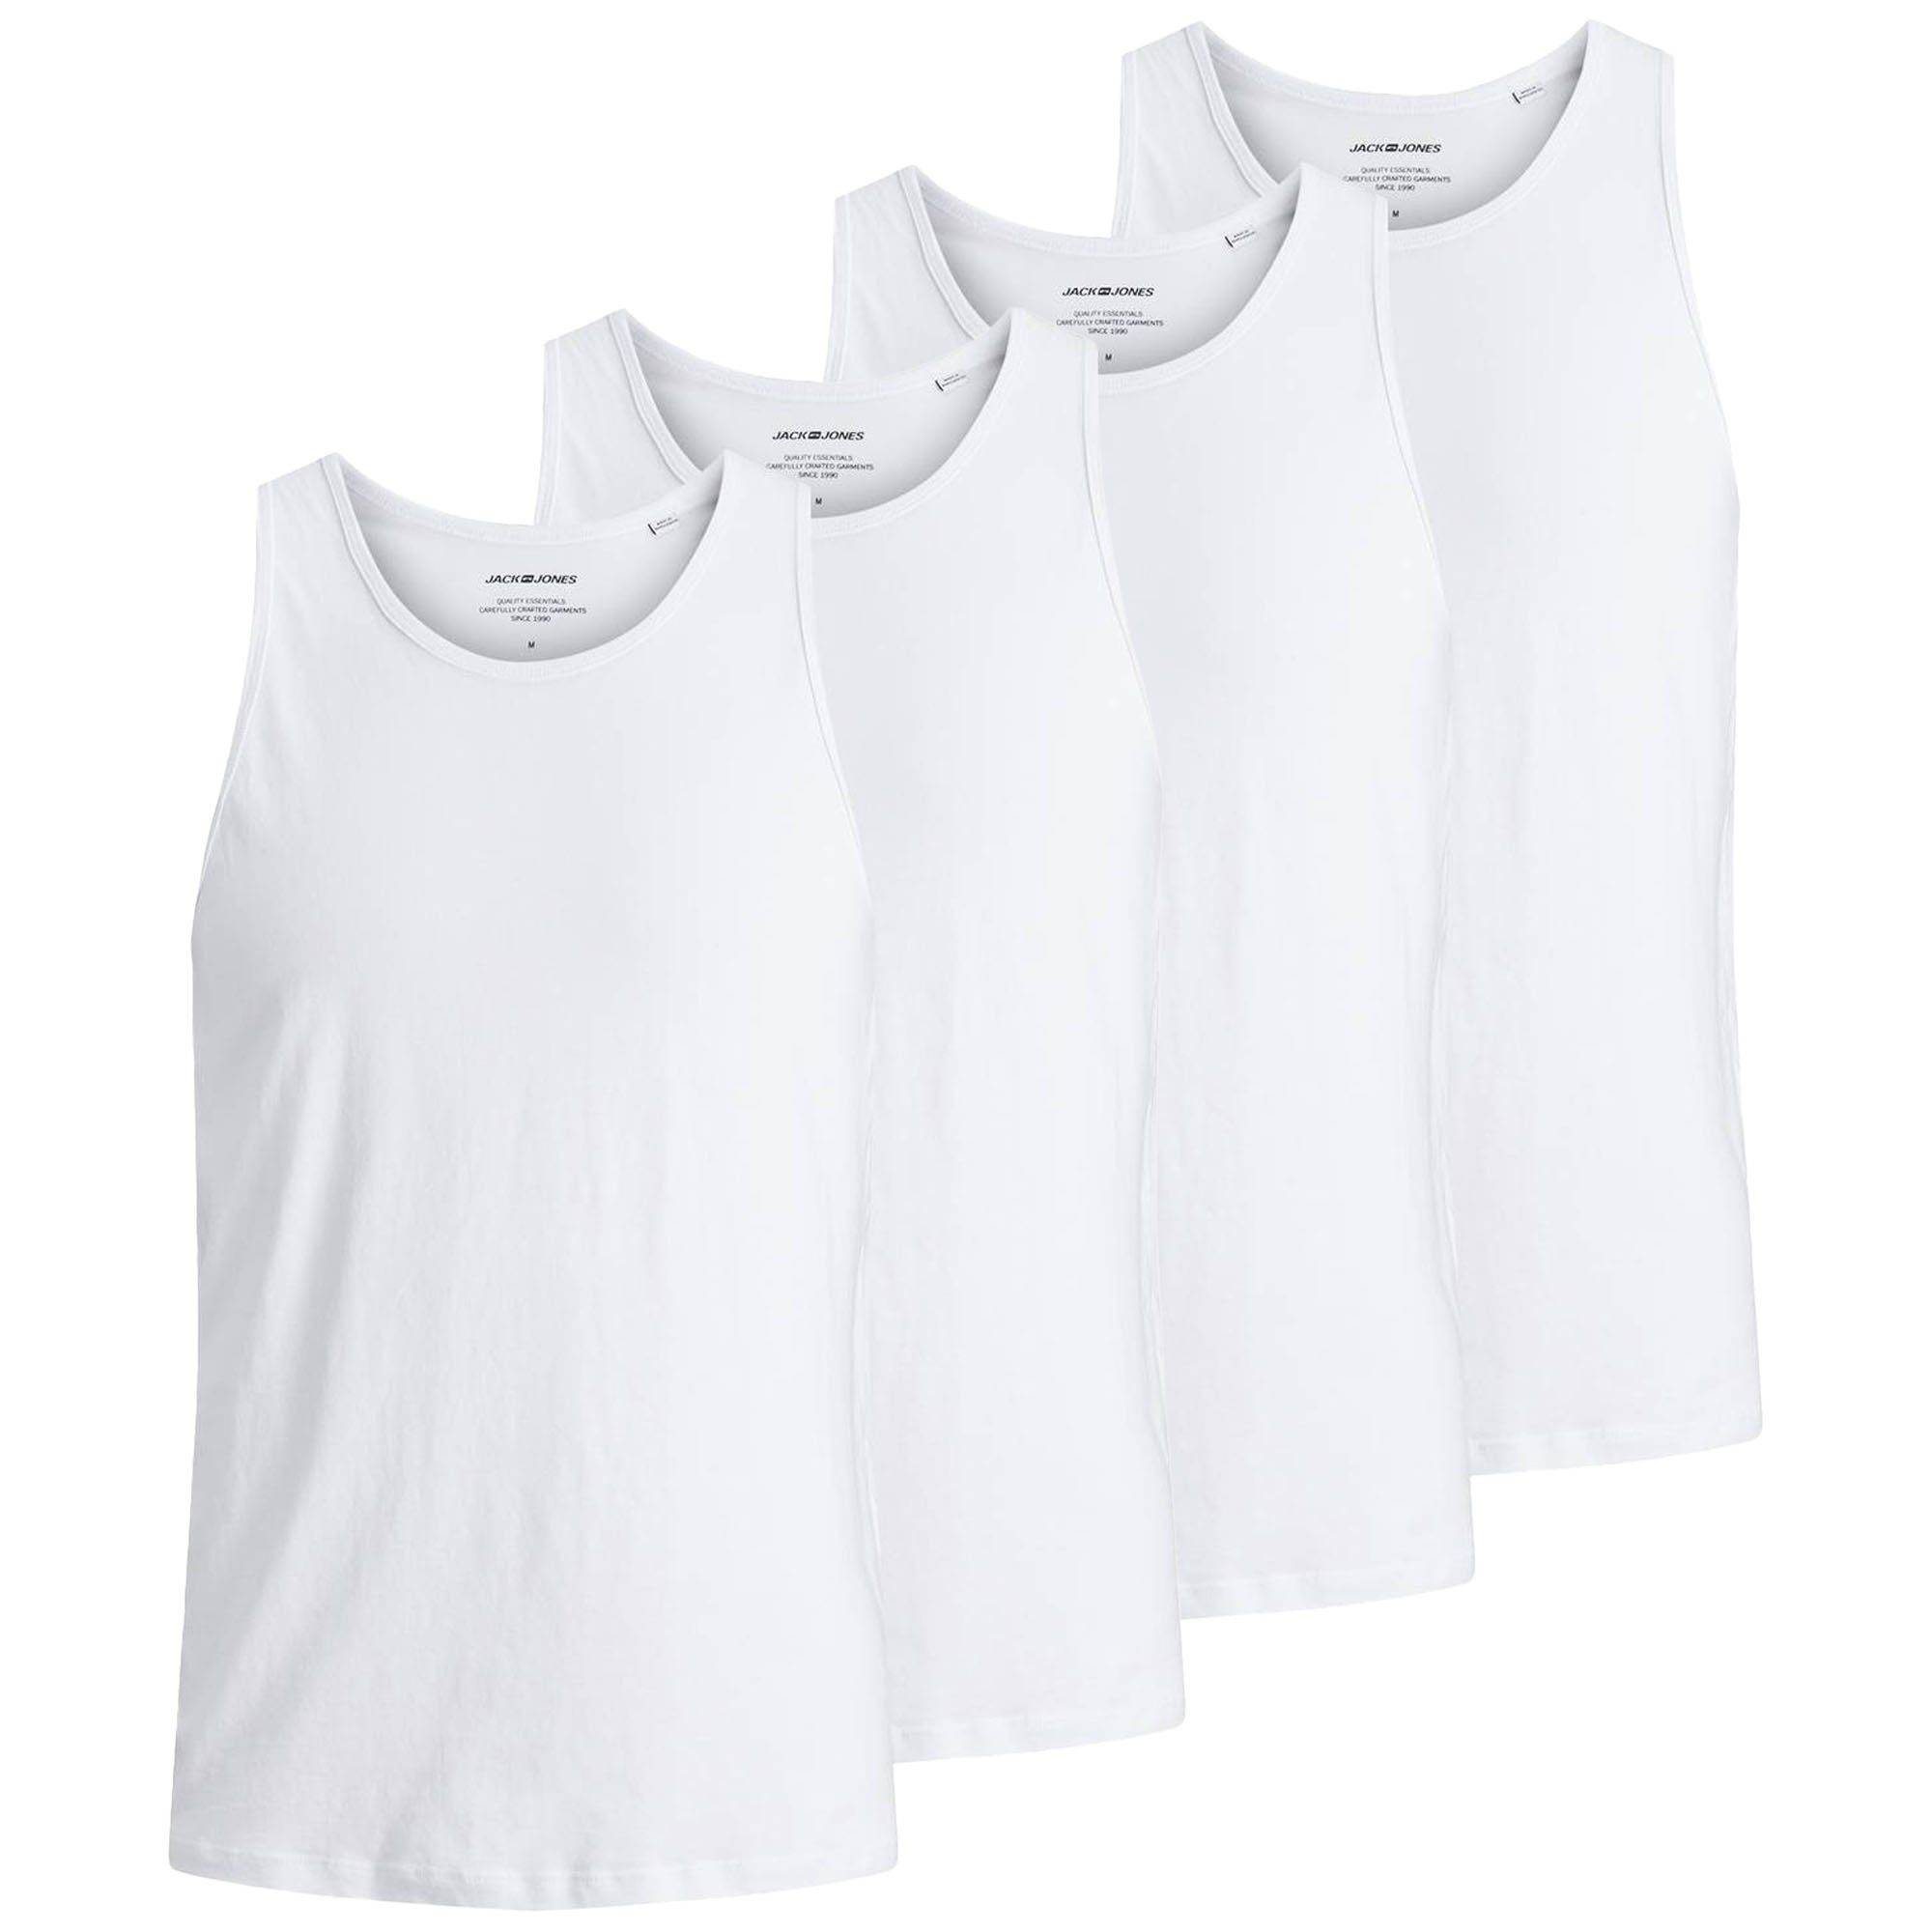 Jack & Jones Unterhemd Herren T-Shirt, 4er Pack - JACBASIC CREW NECK TEE Weiß